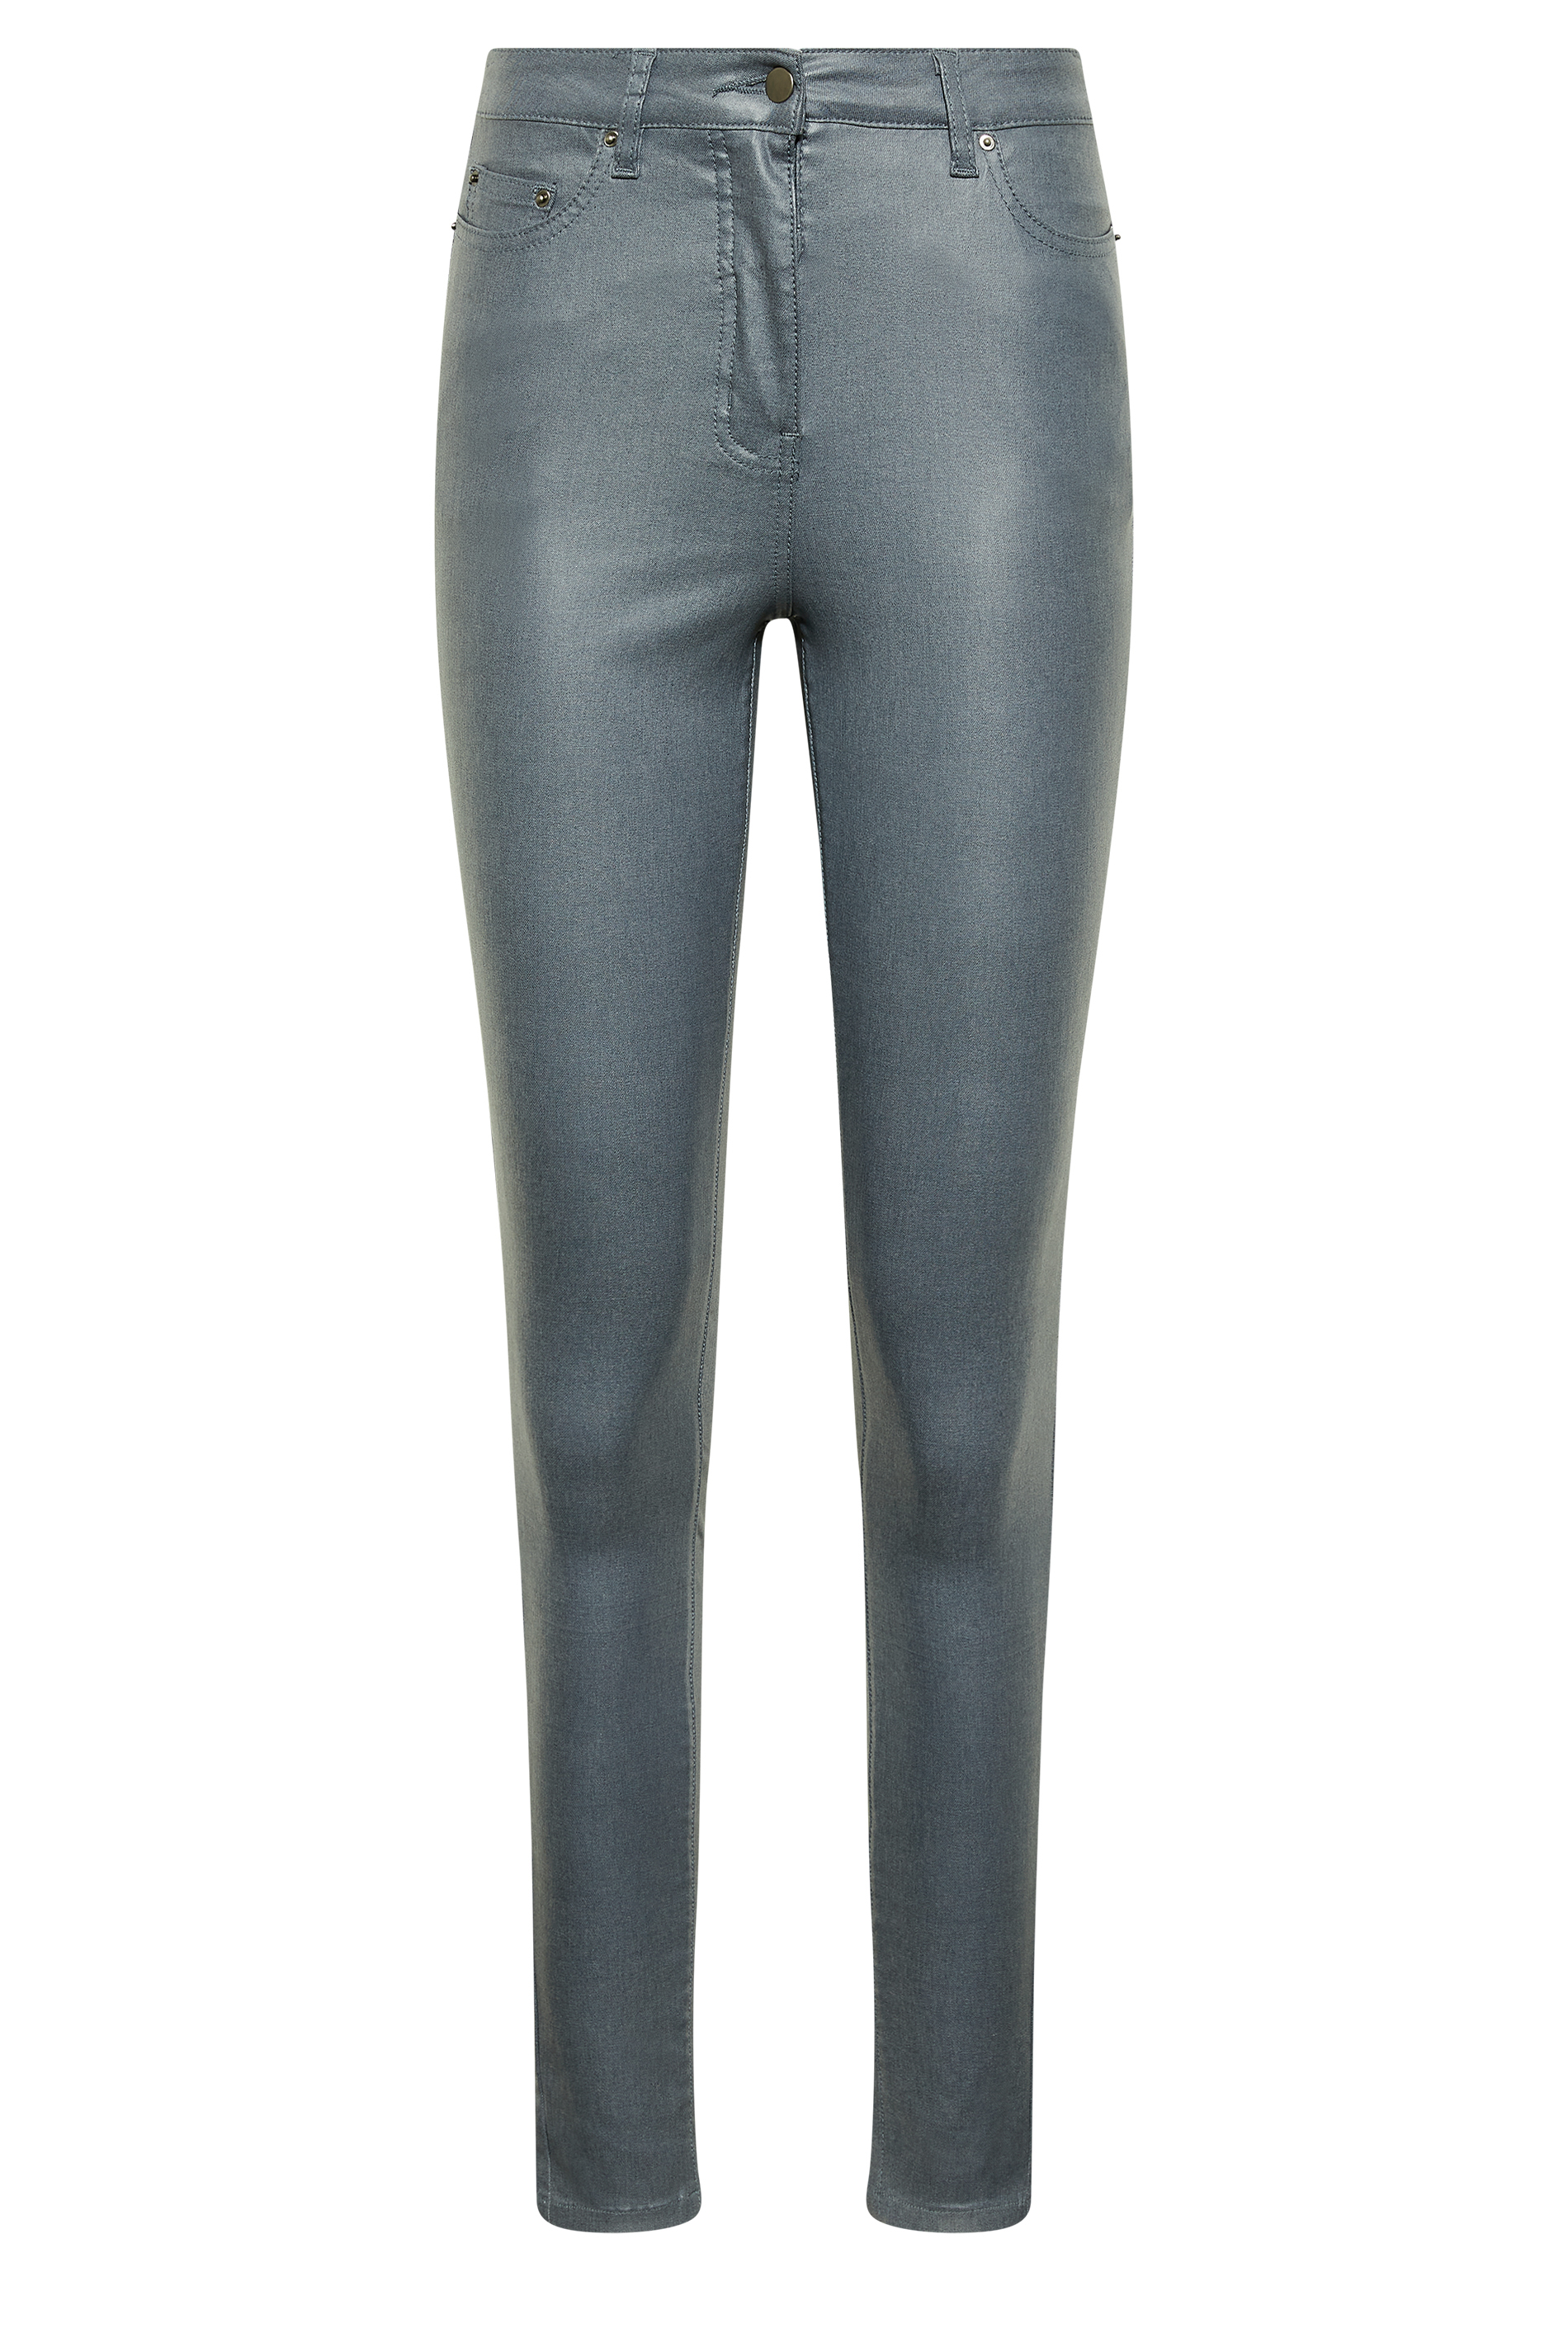 LTS Tall Women's Blue Coated AVA Skinny Jeans | Long Tall Sally  2